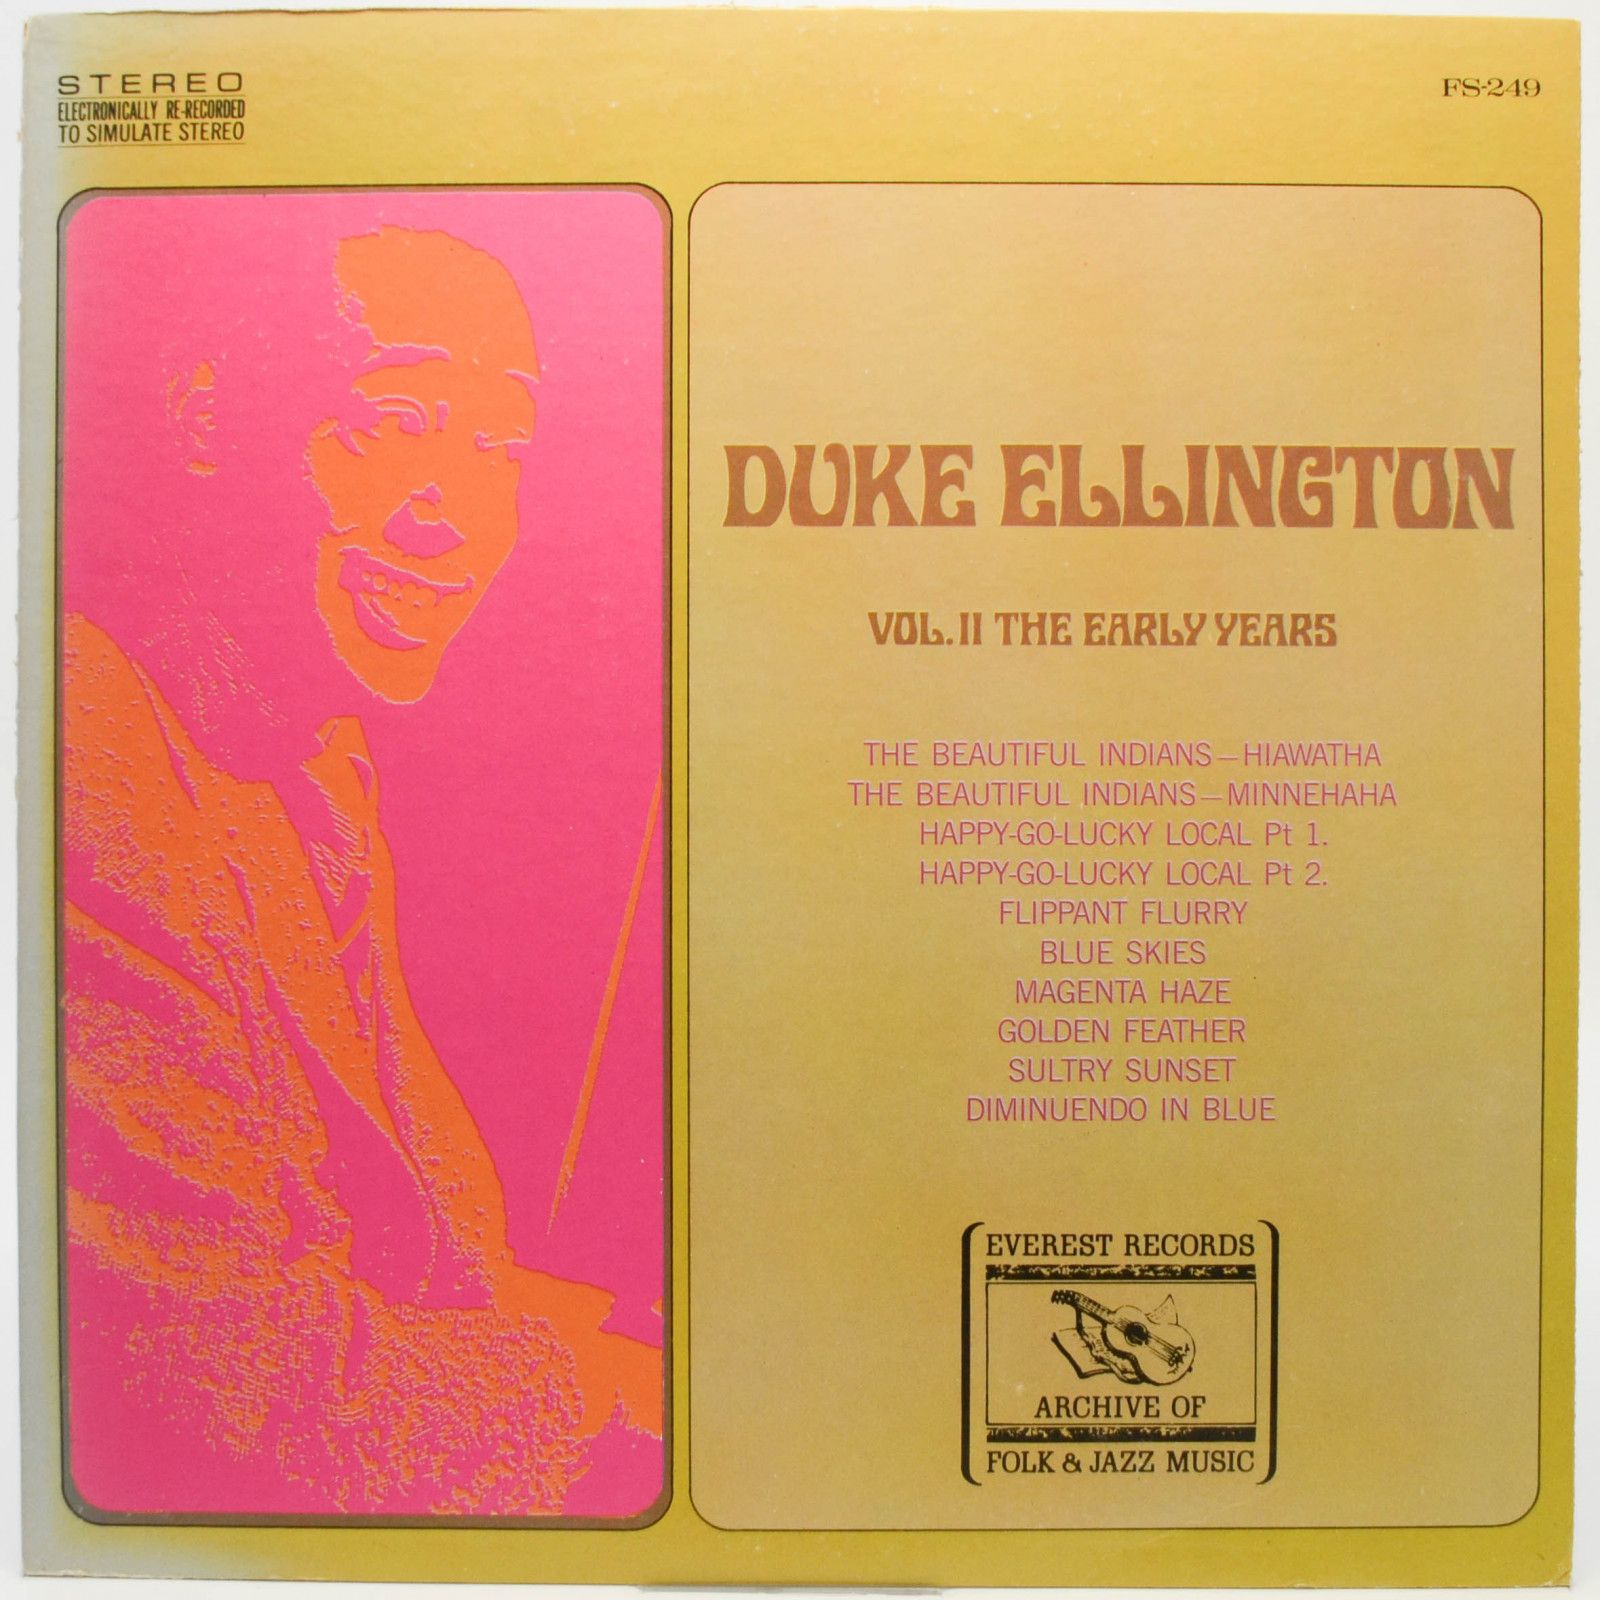 Duke Ellington — Vol. II. The Early Years (USA), 1956